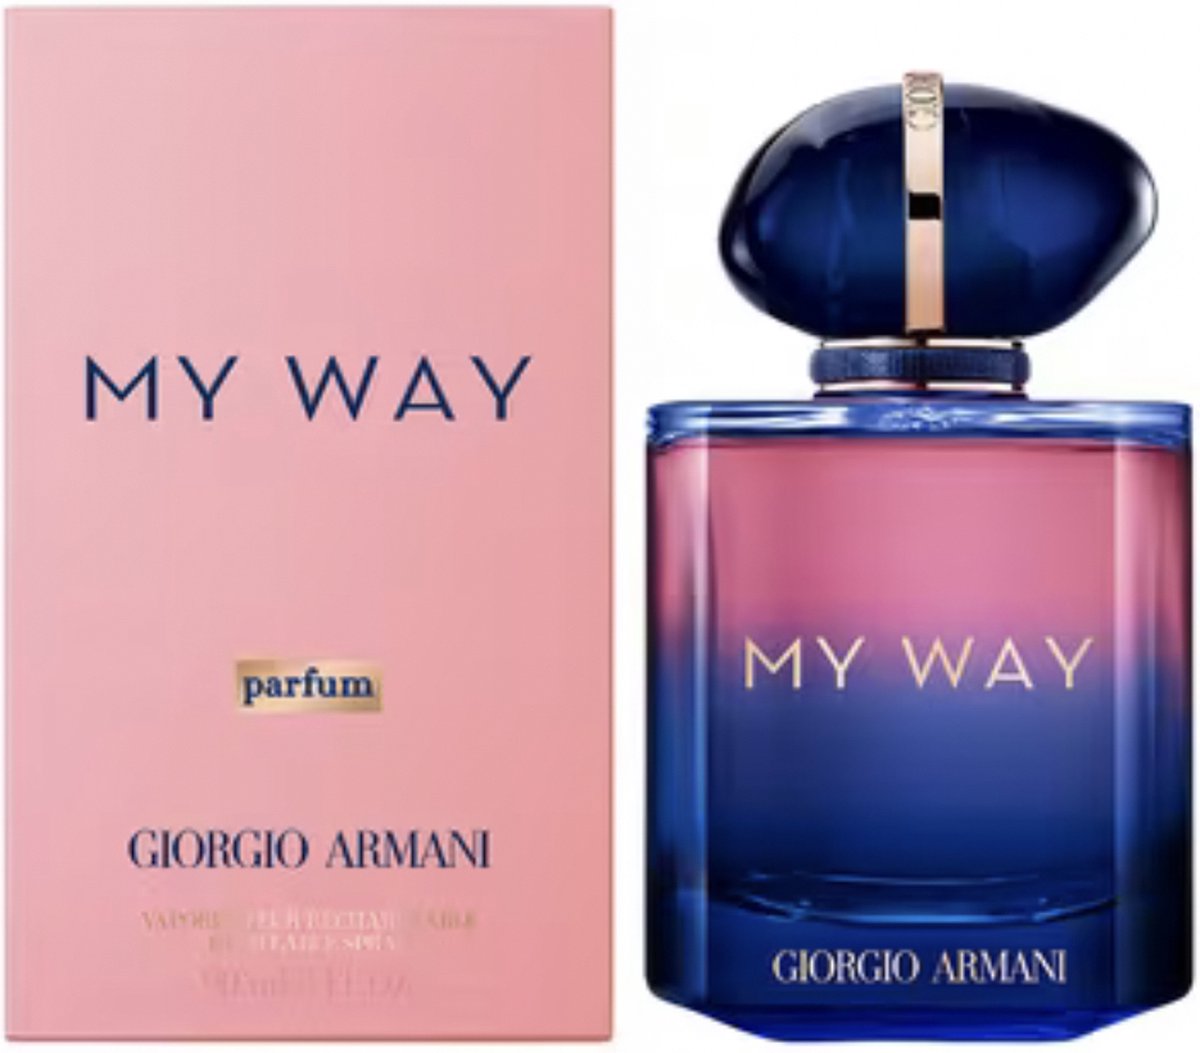 Giorgio Armani My Way Le Parfum 90 ml Eau de parfum